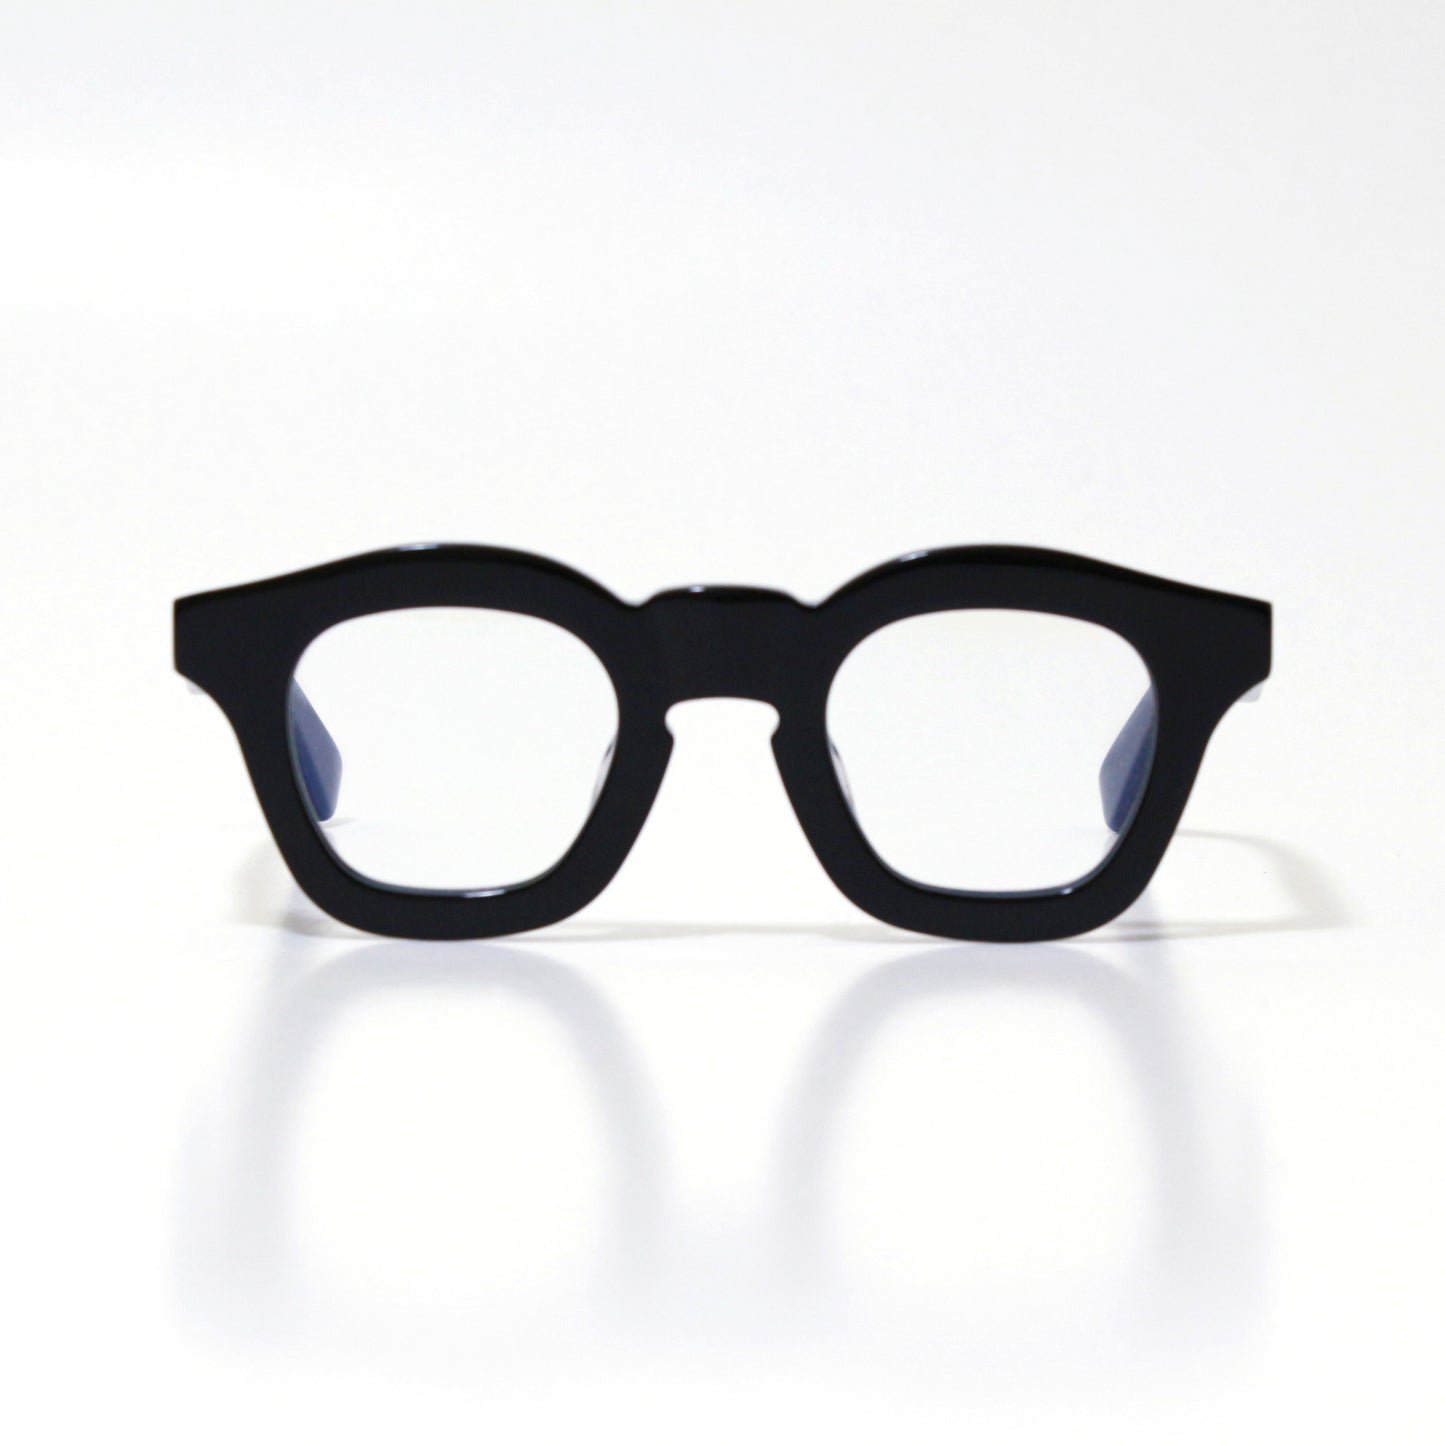 FUJIYAMA GLASSES ORIGINAL WAIELL Wire 厚波士顿富士山眼镜